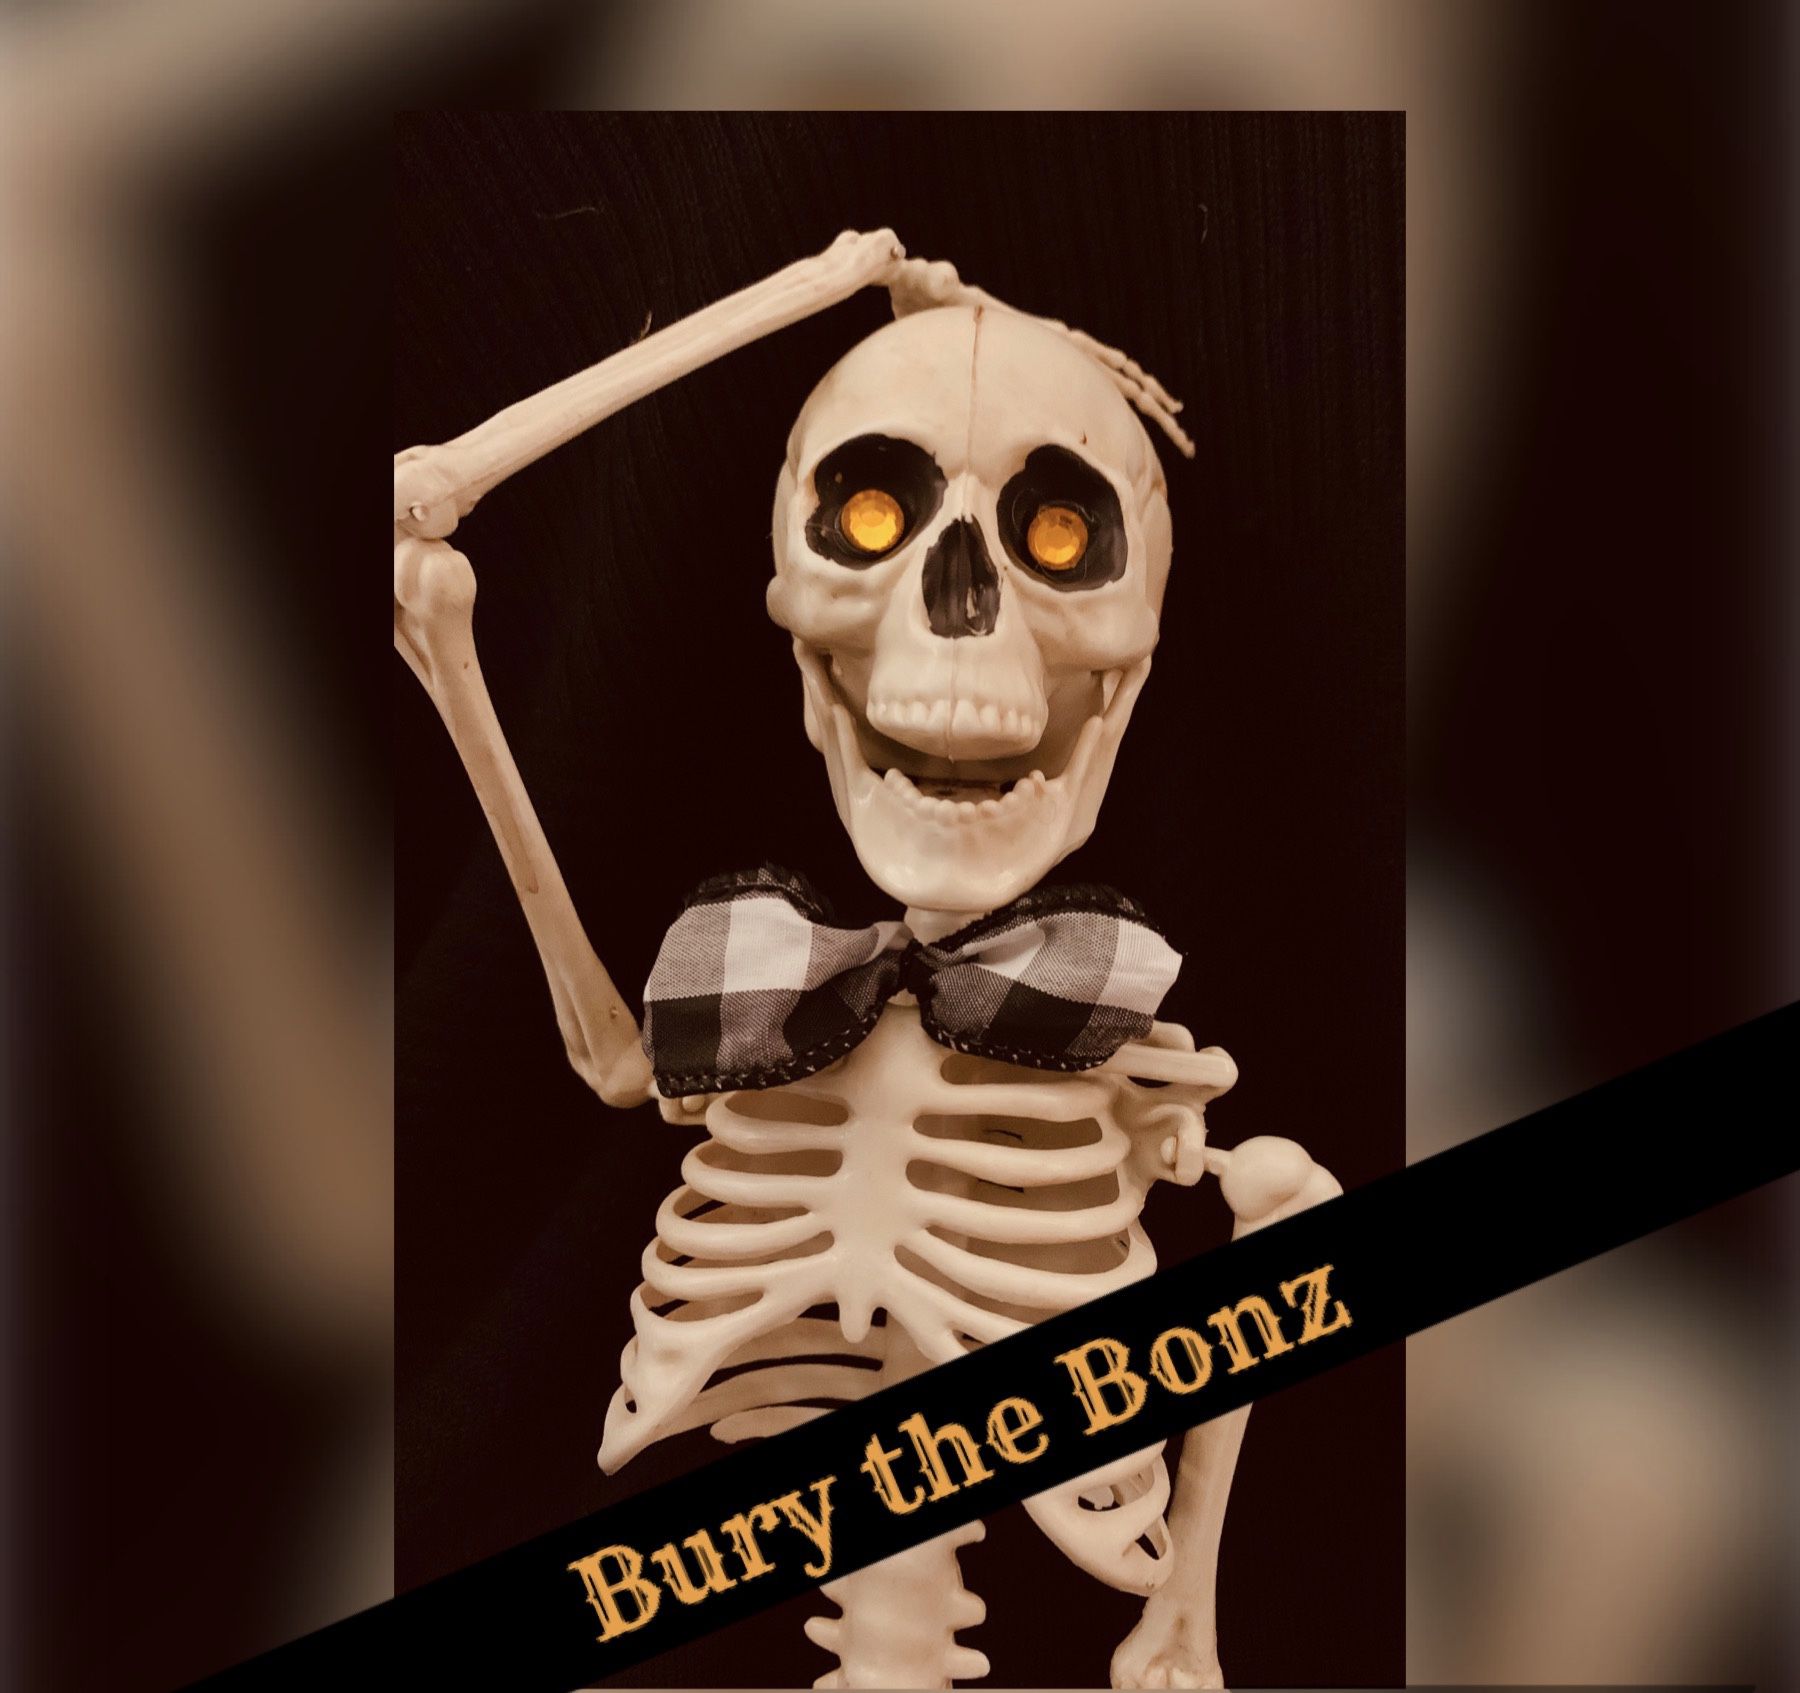 GAME - Bury the BONZ GAME